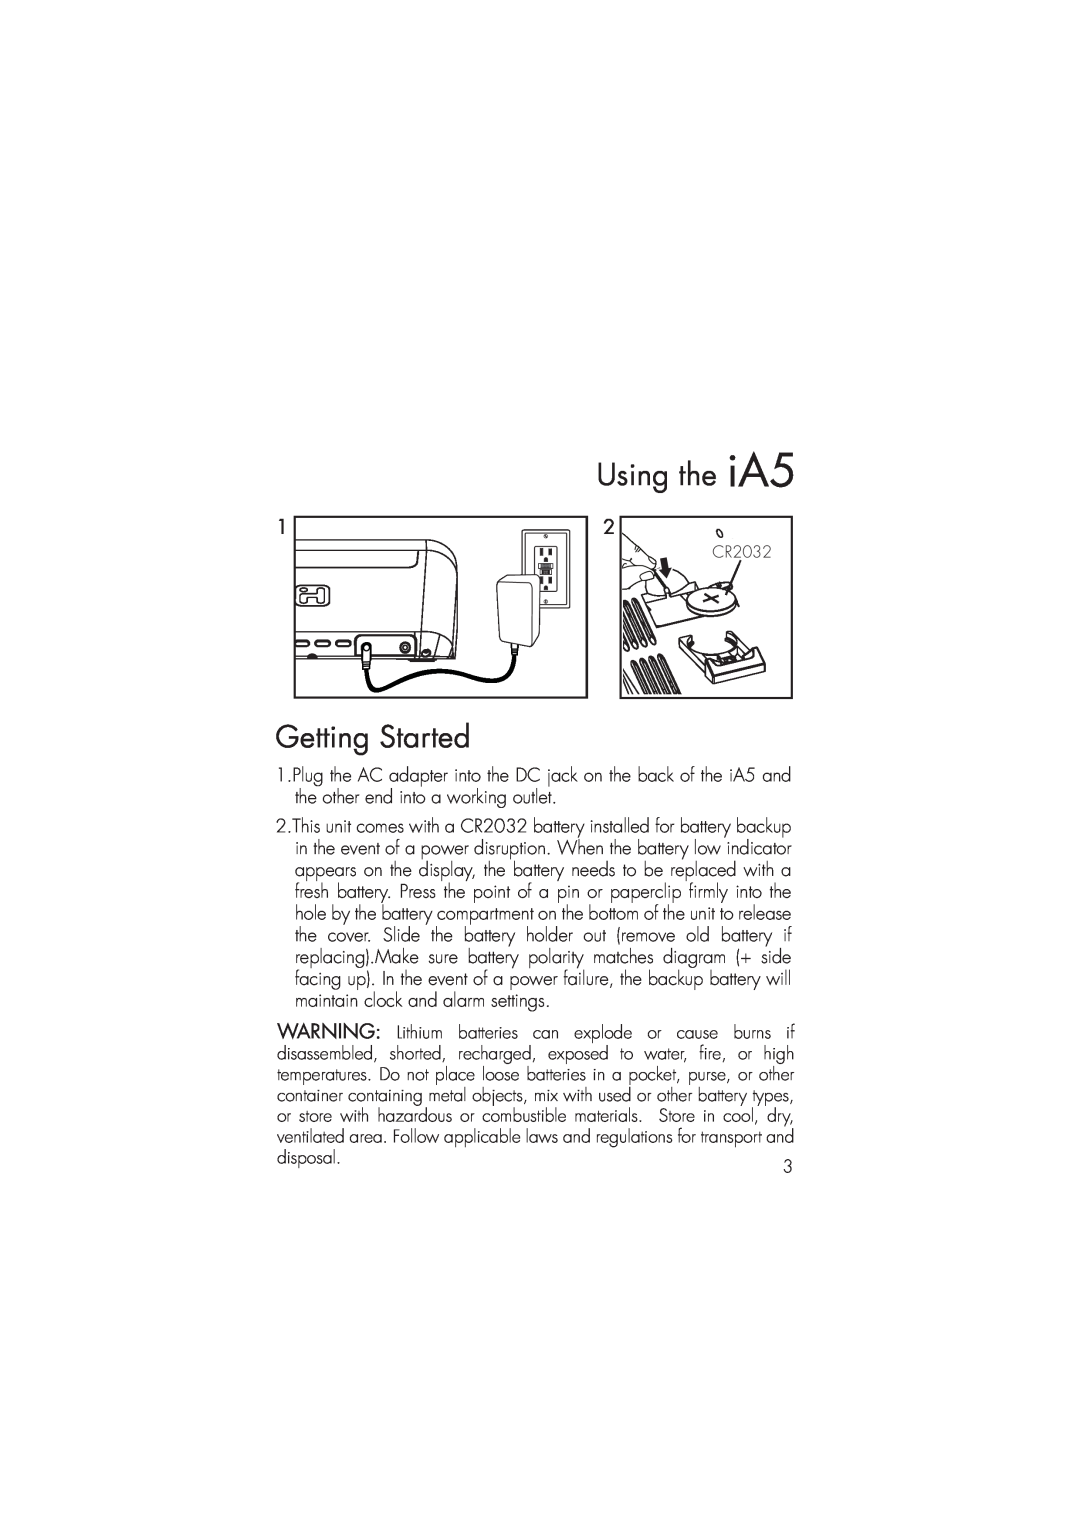 iHome ia5 instruction manual Using the iA5, Getting Started, disposal 